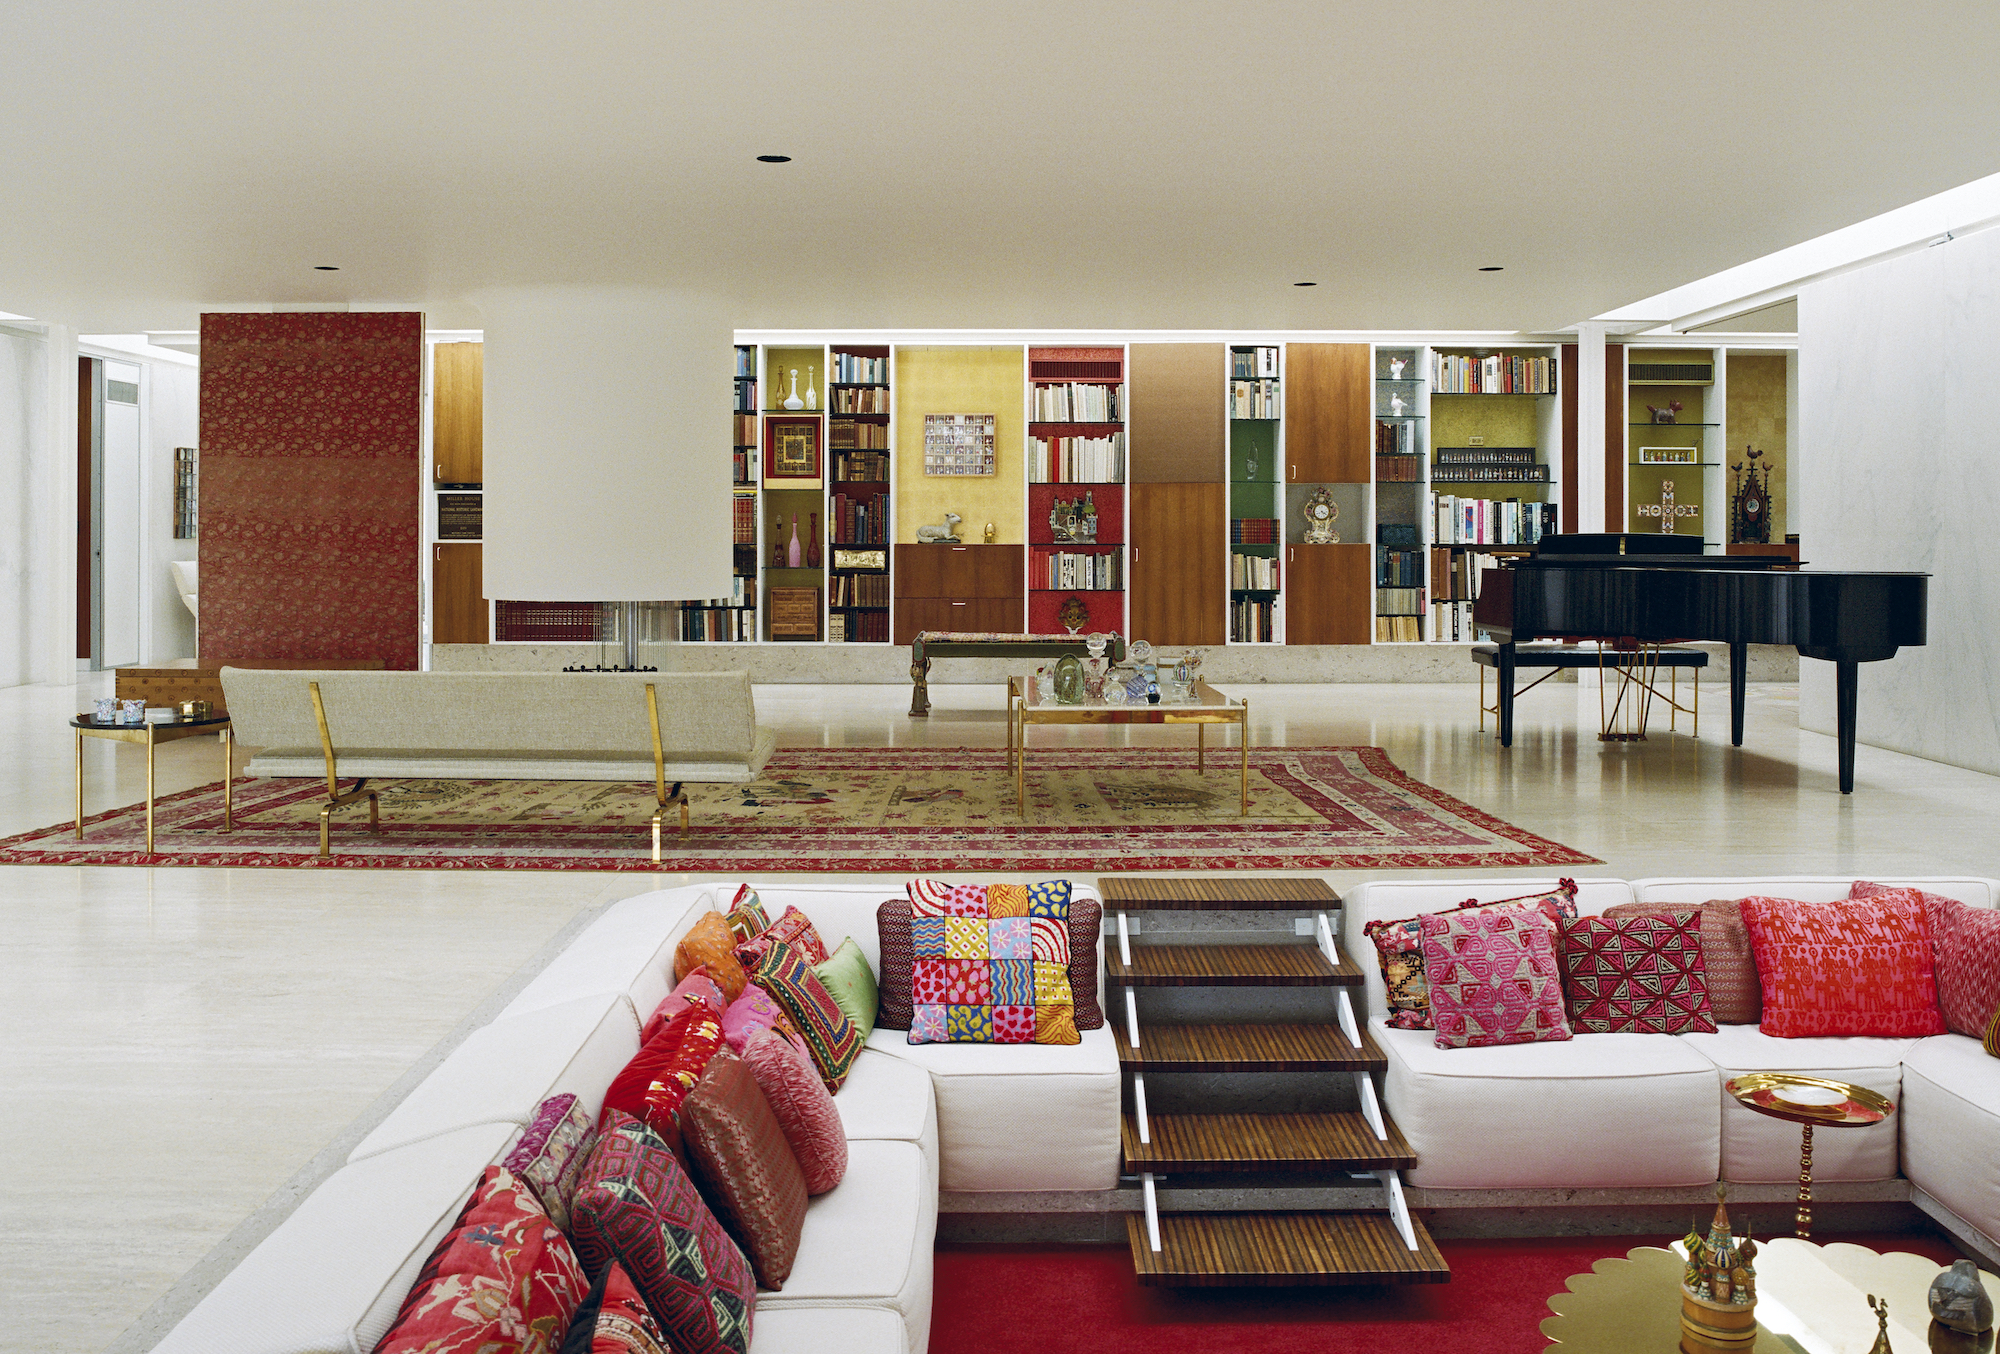 Miller House by architect Eero Saarinen in Effect Magazine